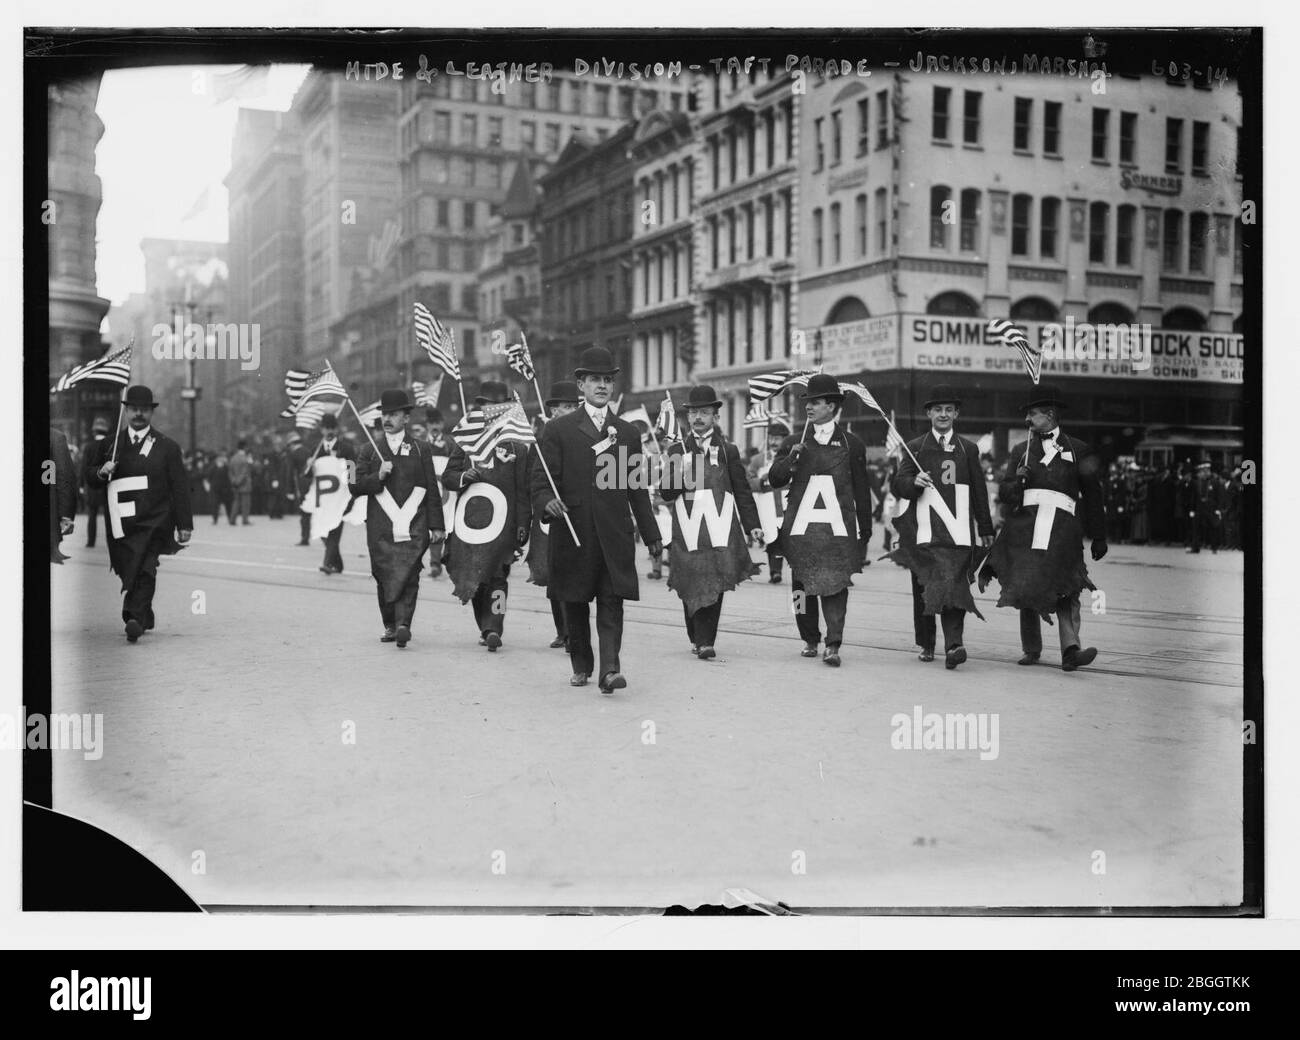 Hide & Leather Division Taft Parade - Jackson, Marshal (New York) Stock Photo